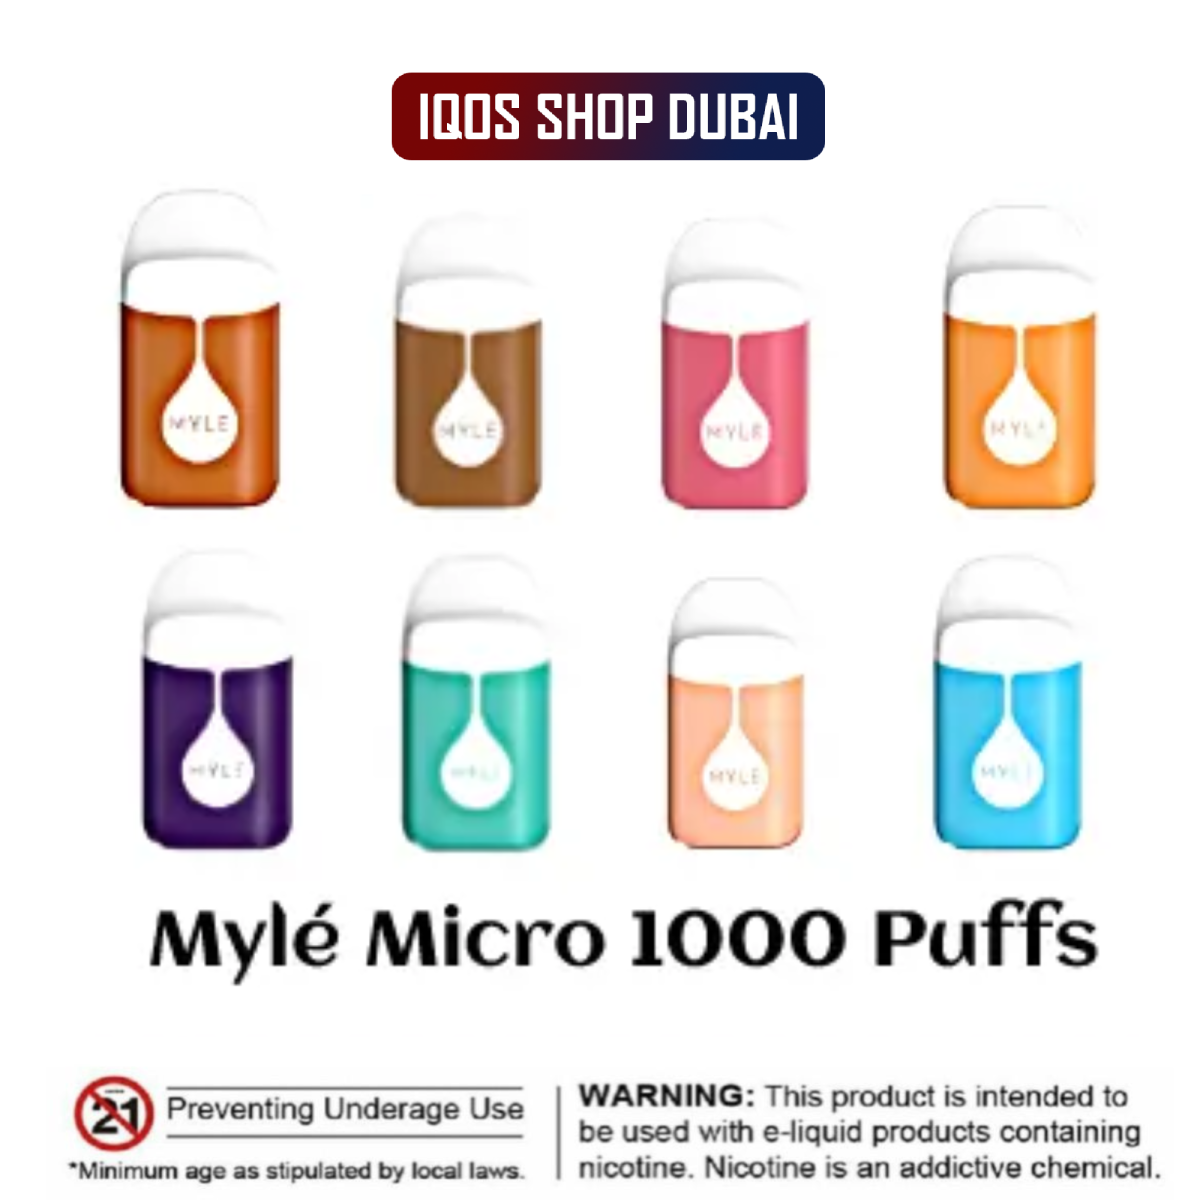 Myle Micro Disposable 1000 Puffs Vape